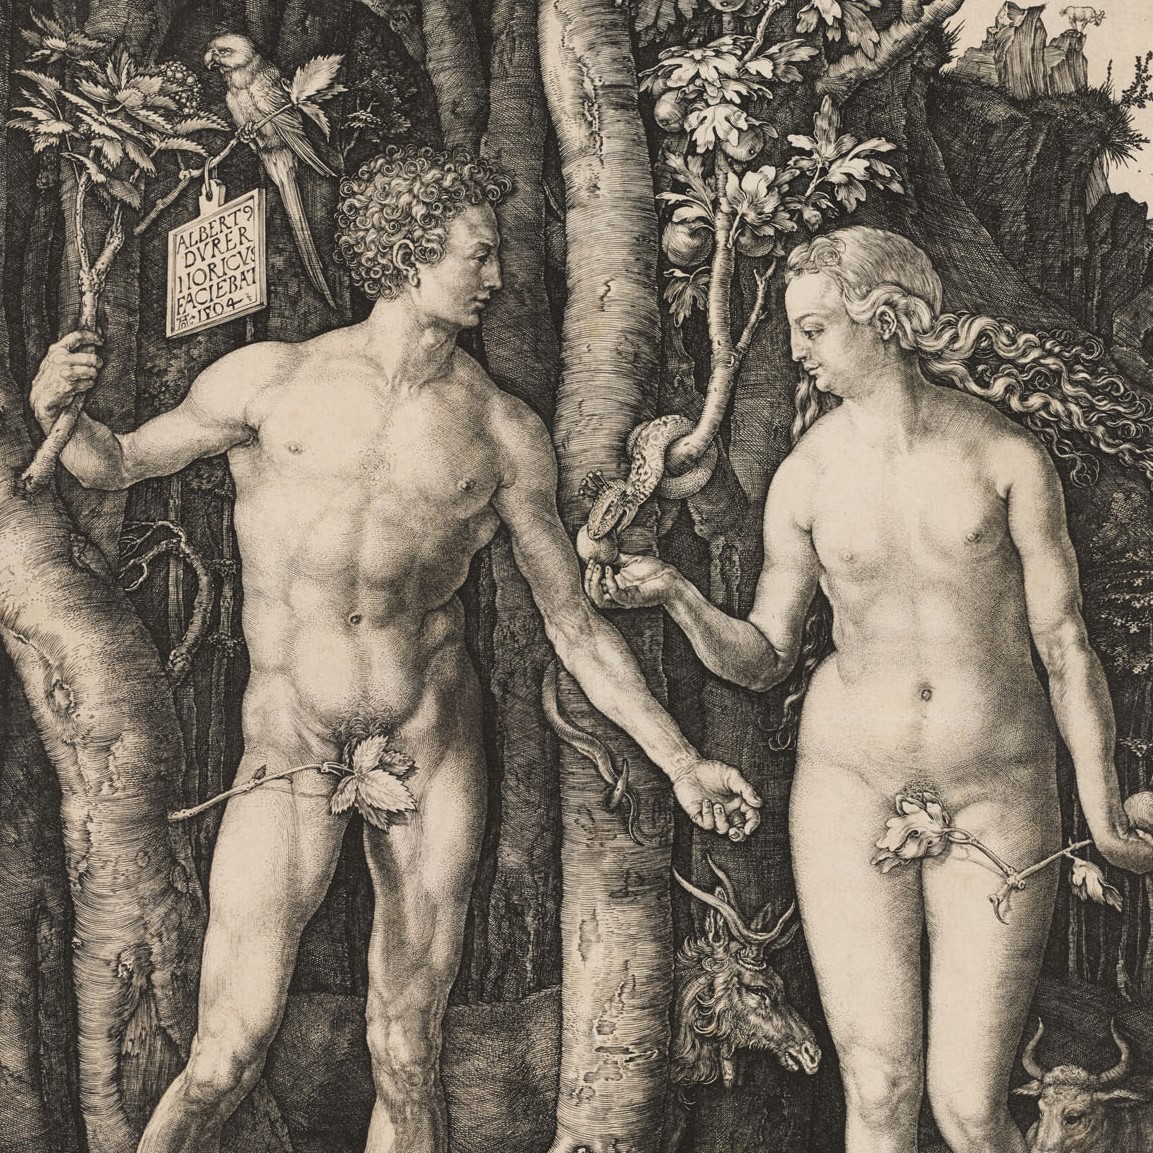 Dürer and After